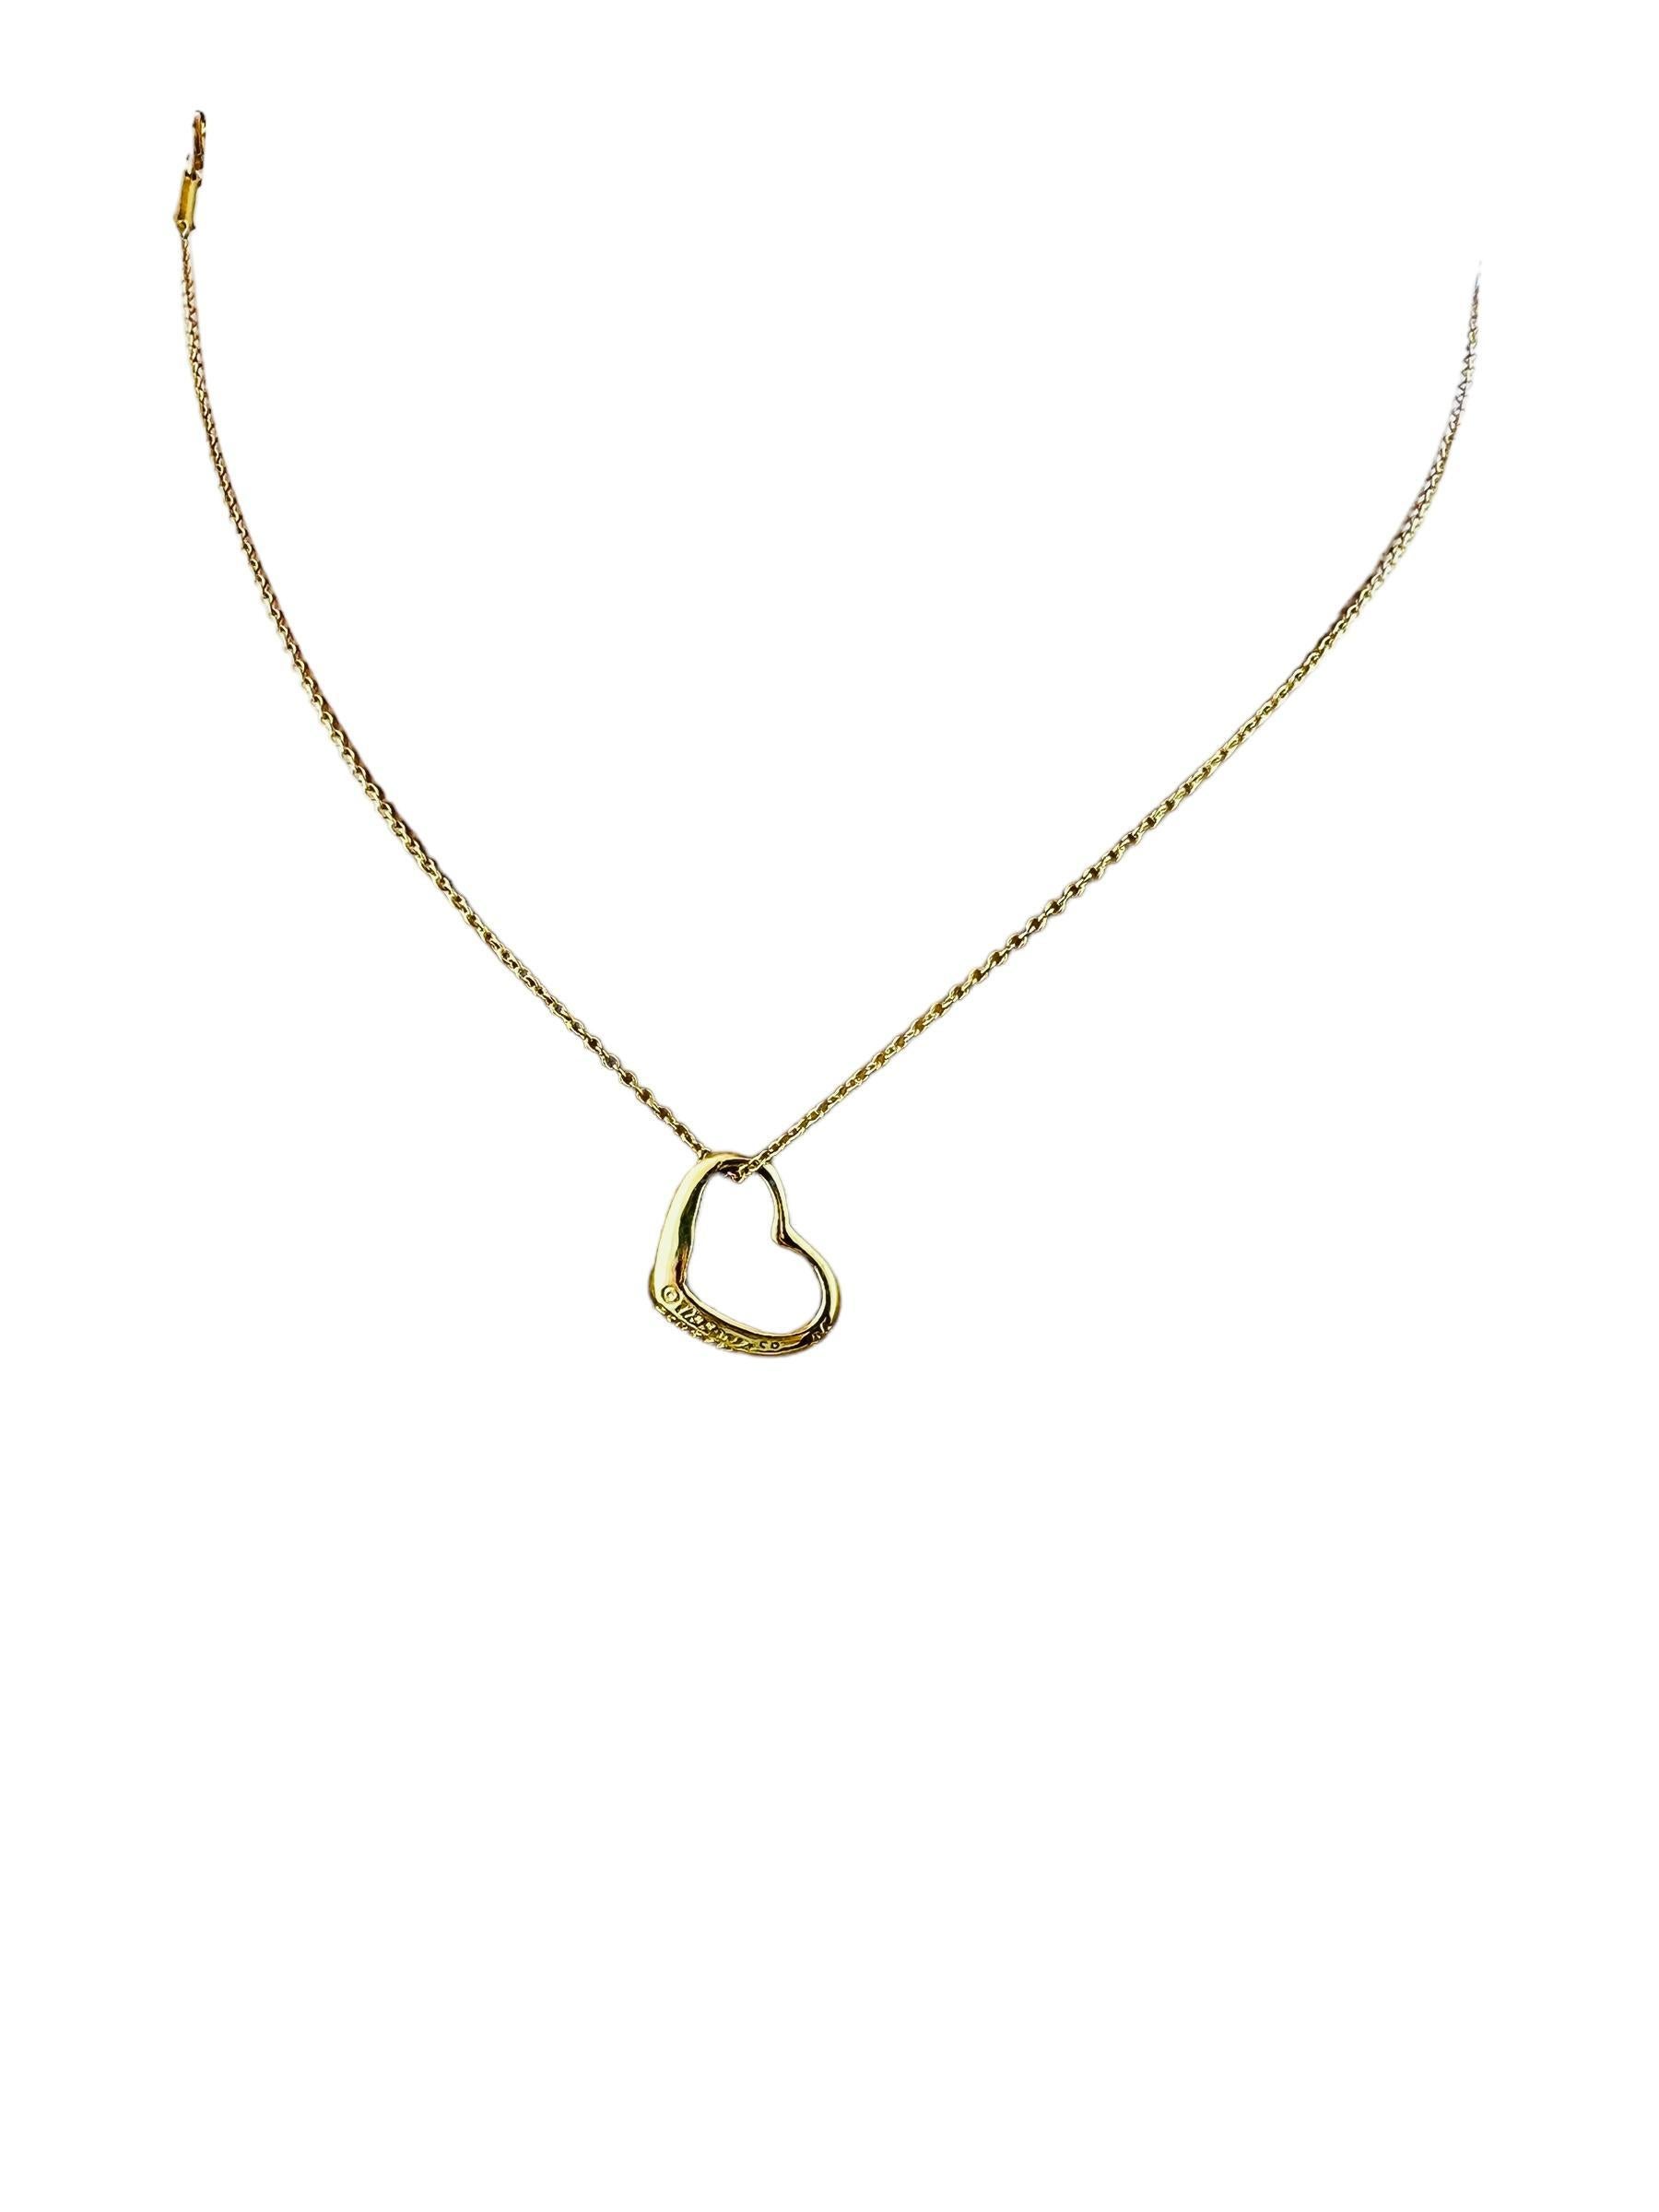 Tiffany & Co. Elsa Peretti 18K Yellow Gold Open Heart Pendant Necklace #15424 1